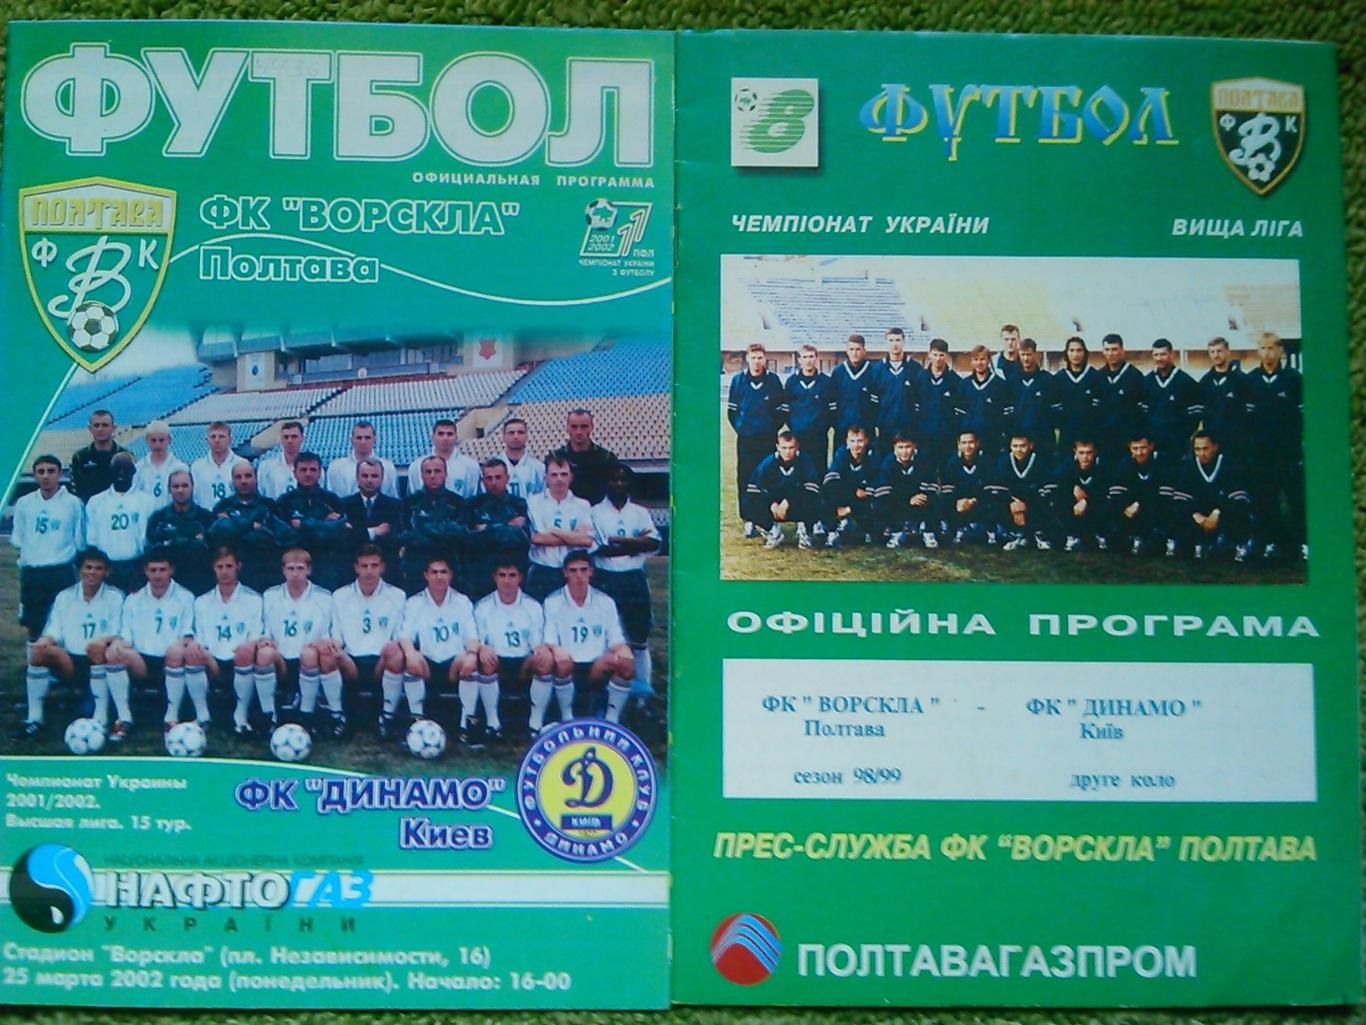 ВОРСКЛА Полтава - ДИНАМО Київ, Киев 10.05.1999. Оптом скидки до 46%!